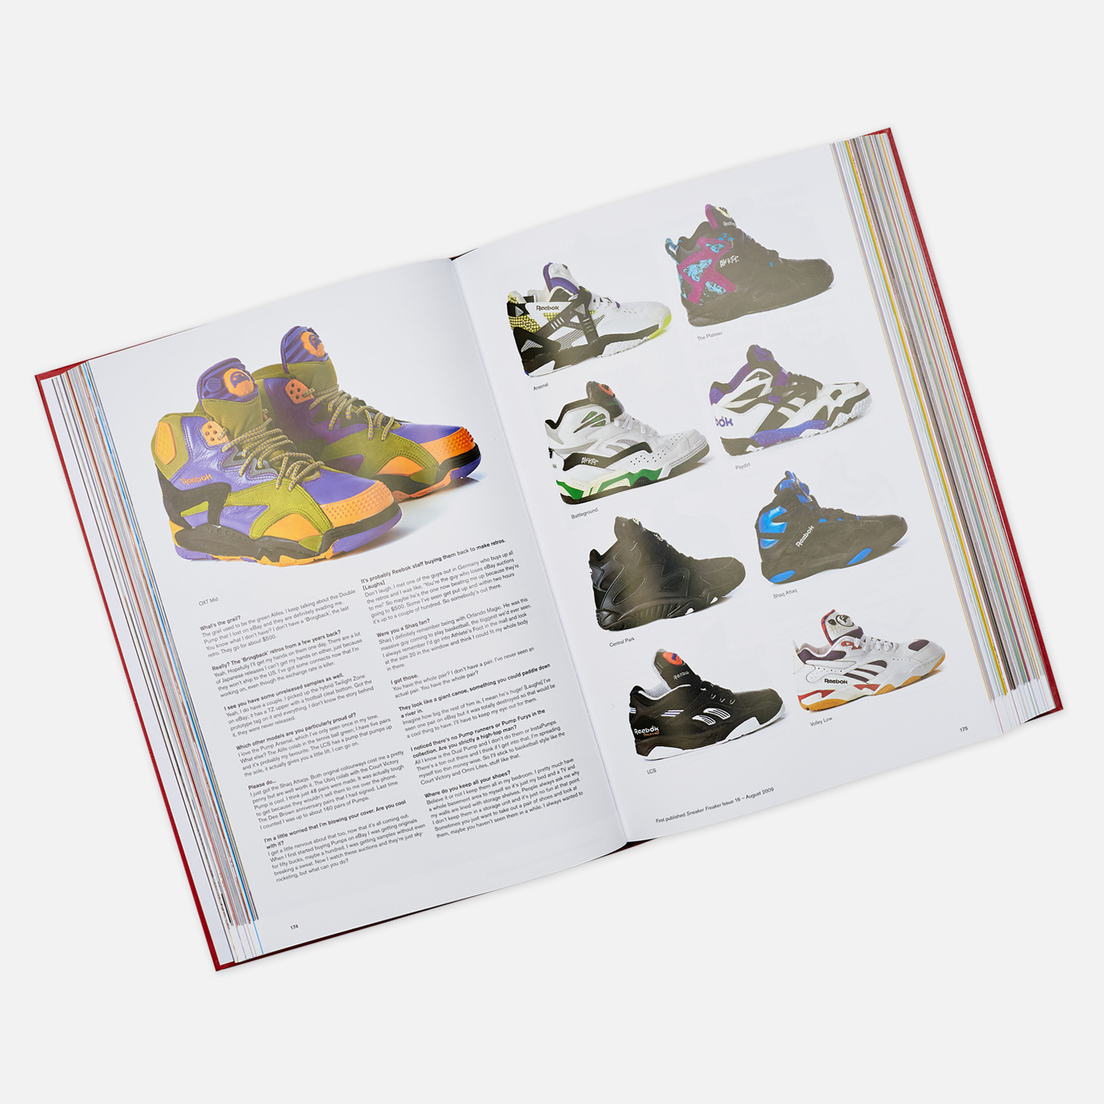 TASCHEN Книга The Ultimate Sneaker Book